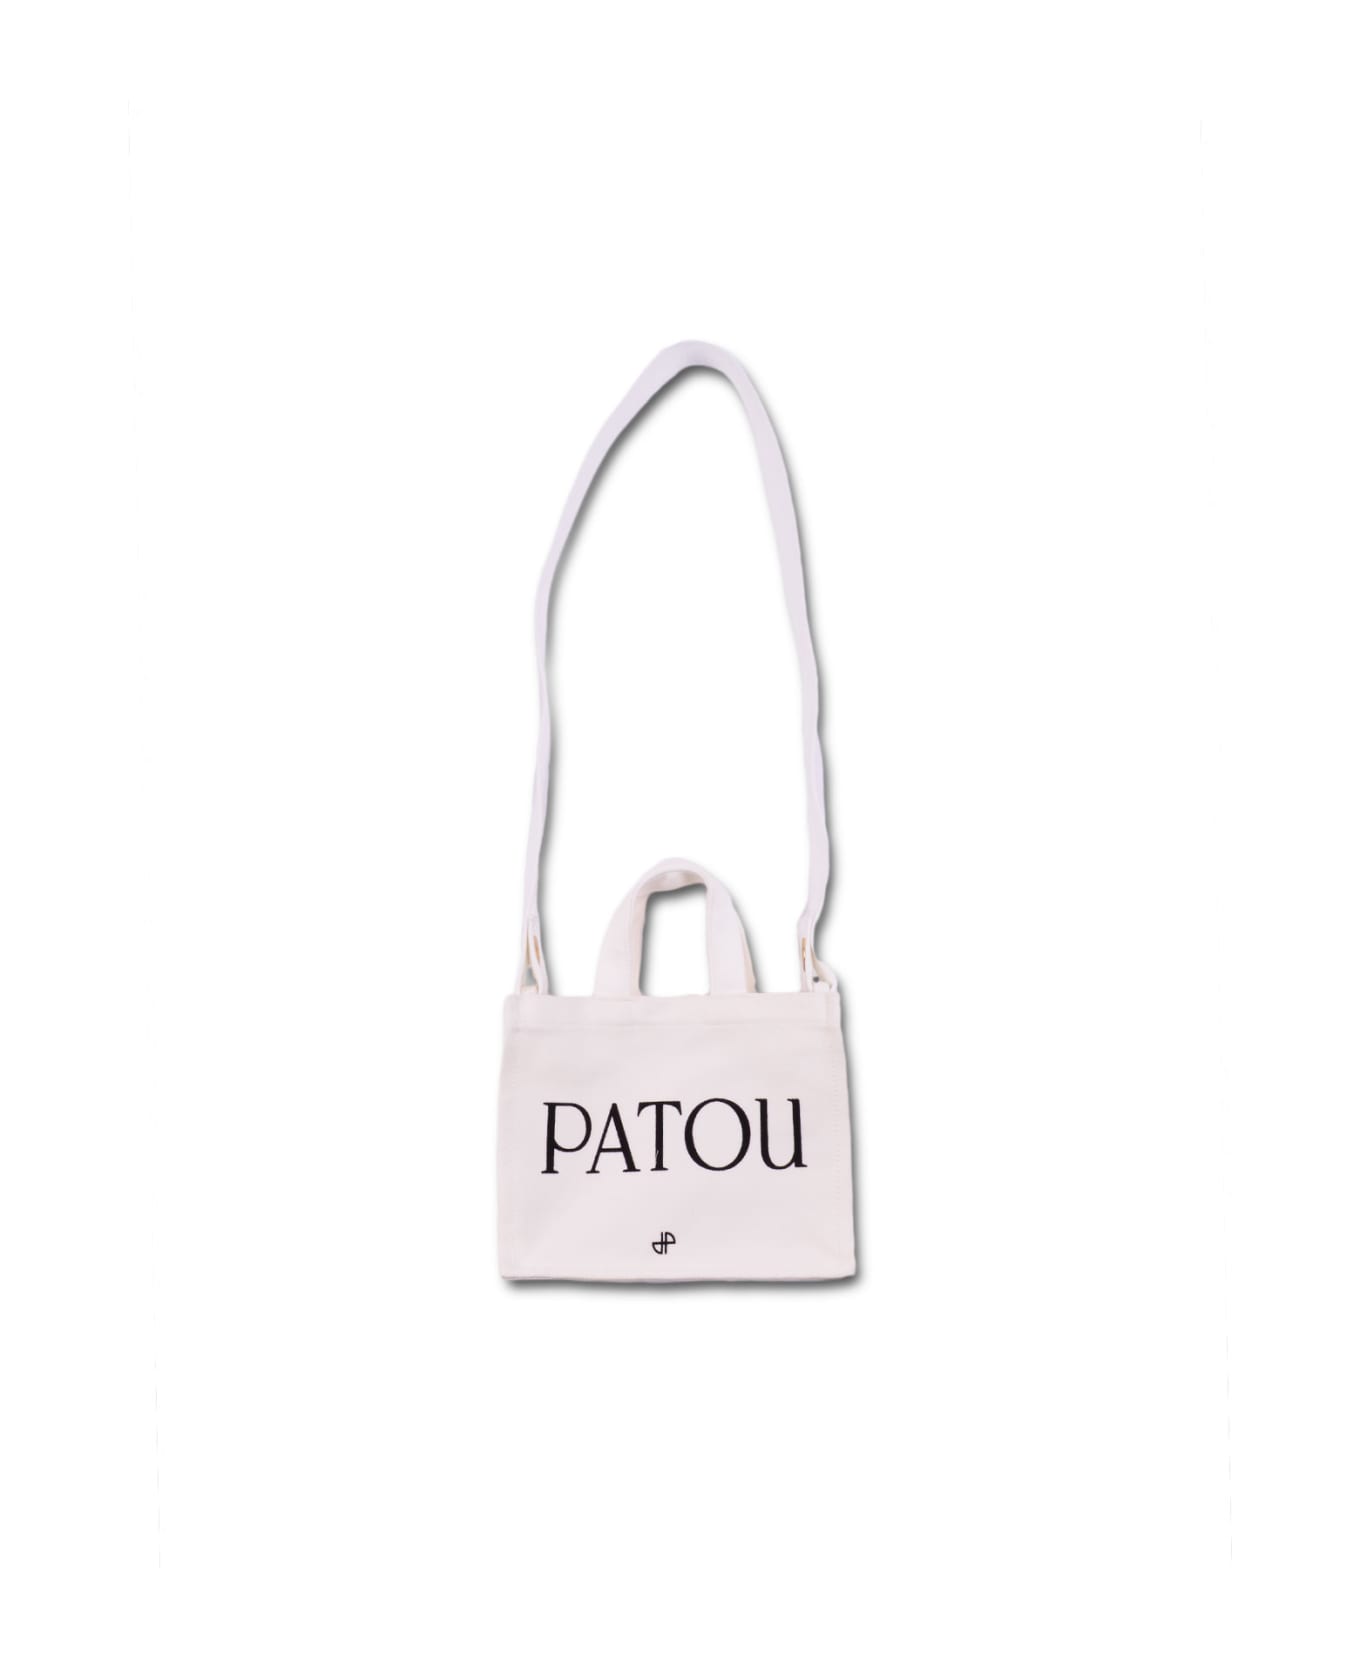 Patou Small Patou Tote Bag - White